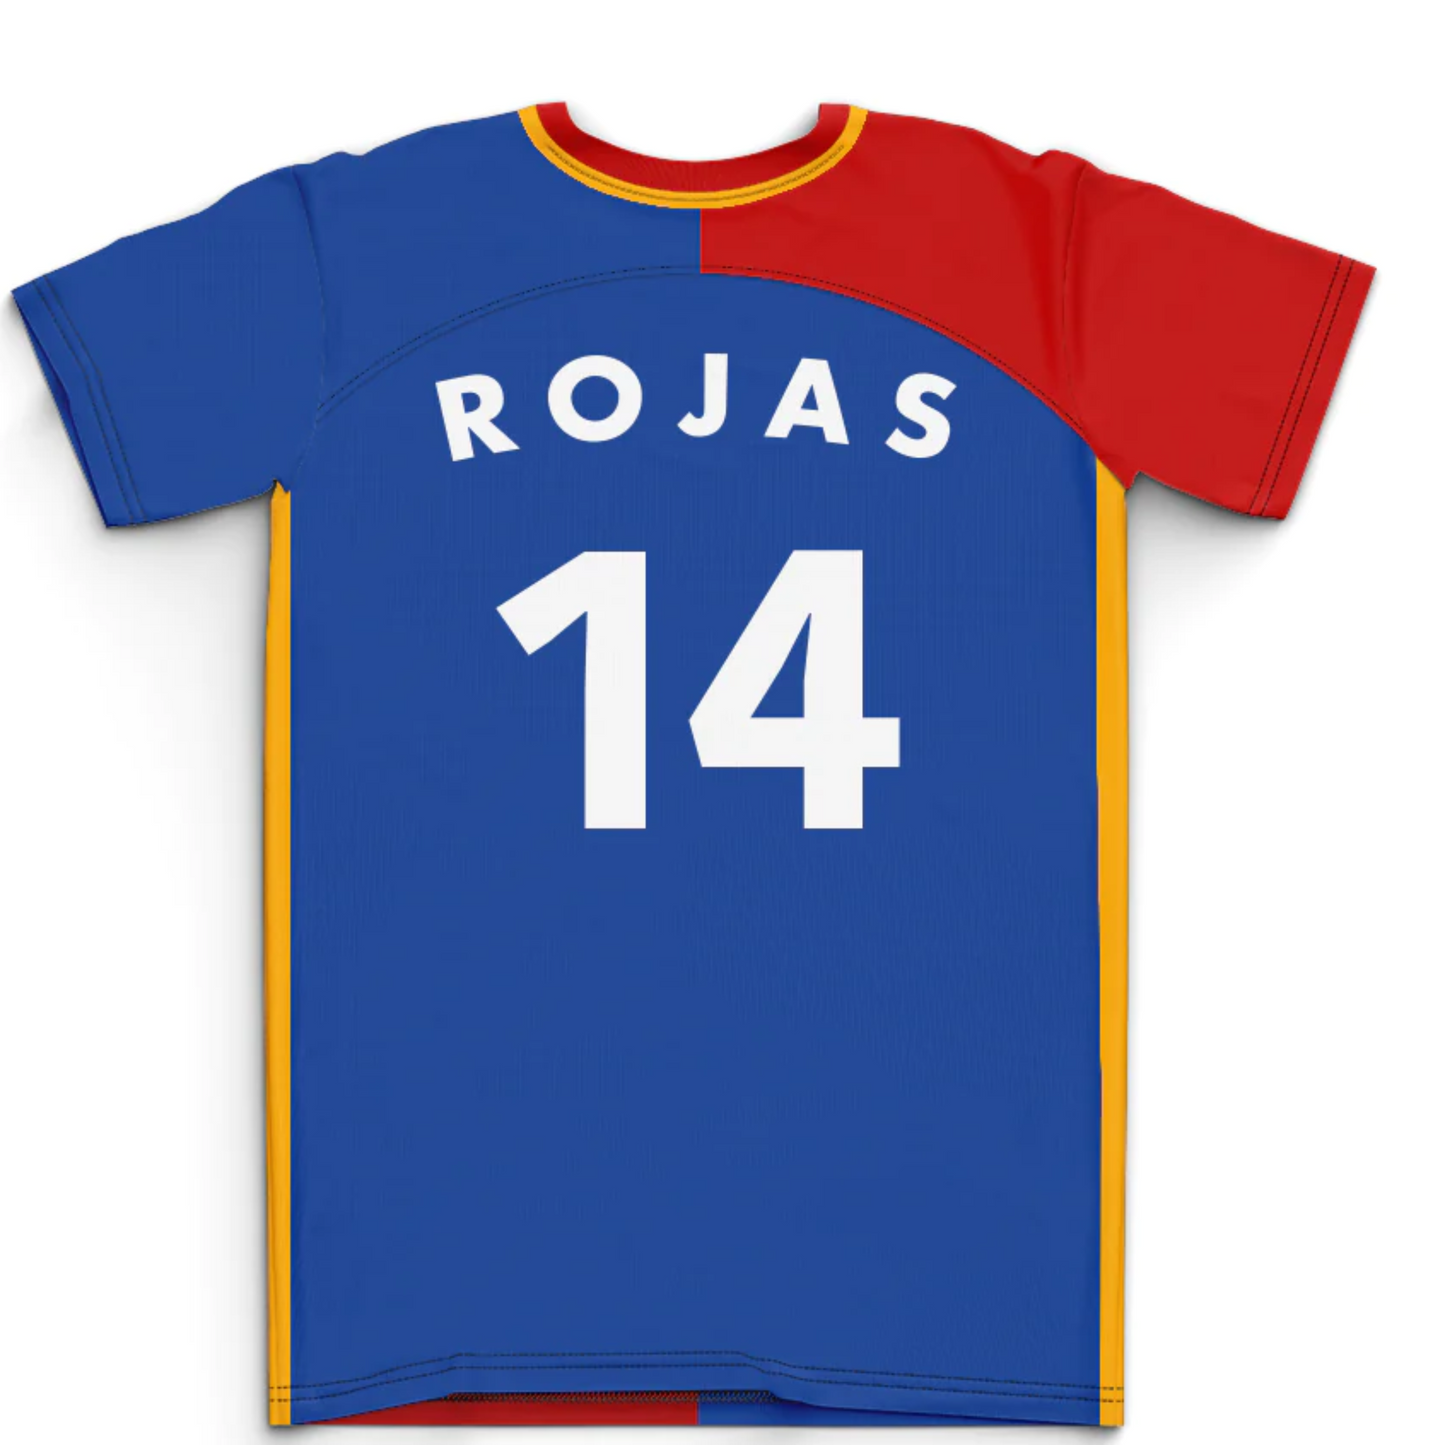 # 14 Rojas Jersey